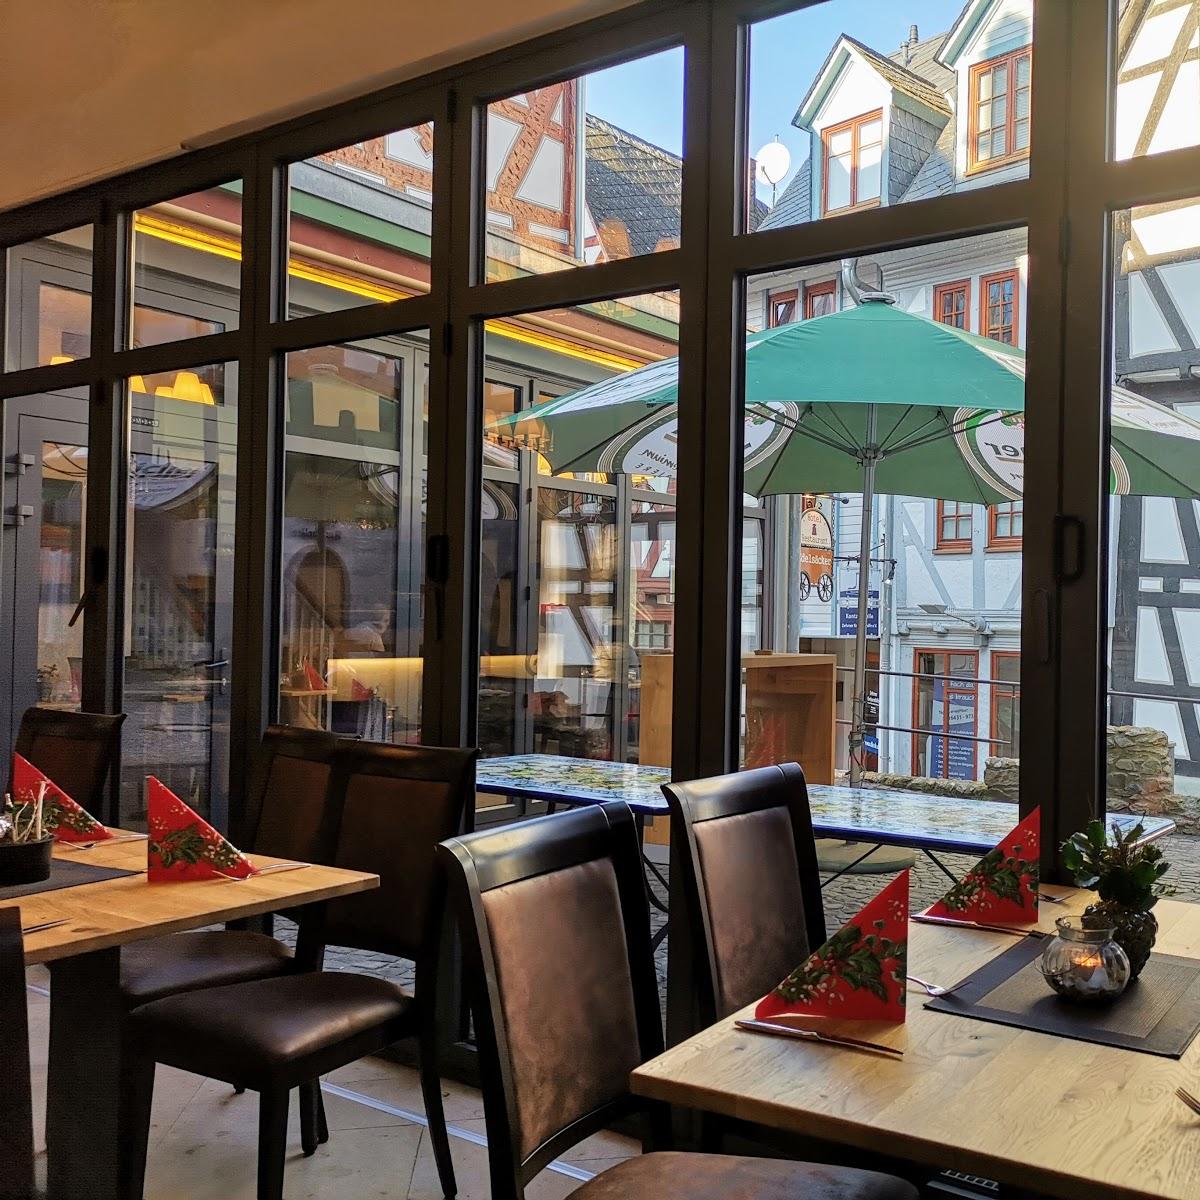 Restaurant "Edelsäcker" in Limburg an der Lahn